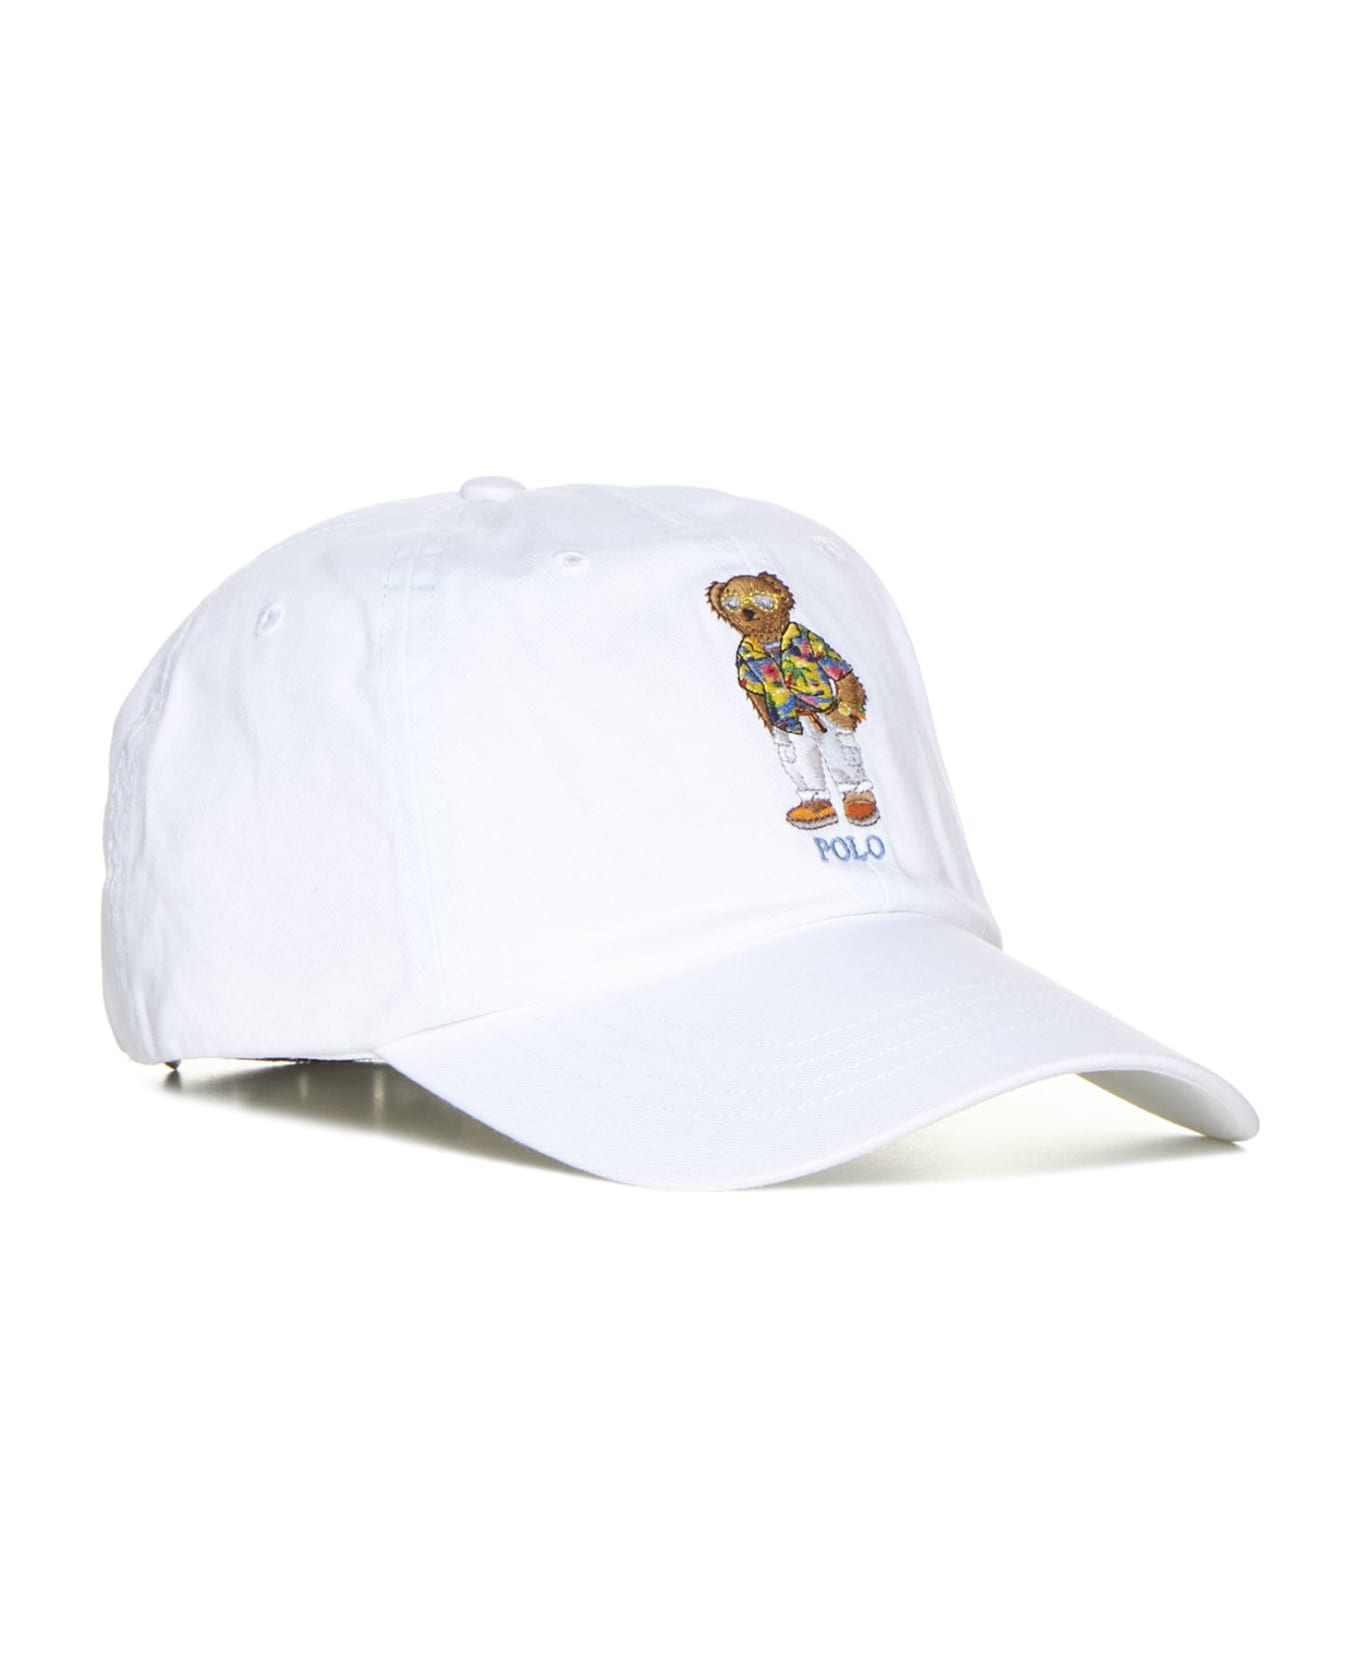 Polo Ralph Lauren Polo Bear Hat - White